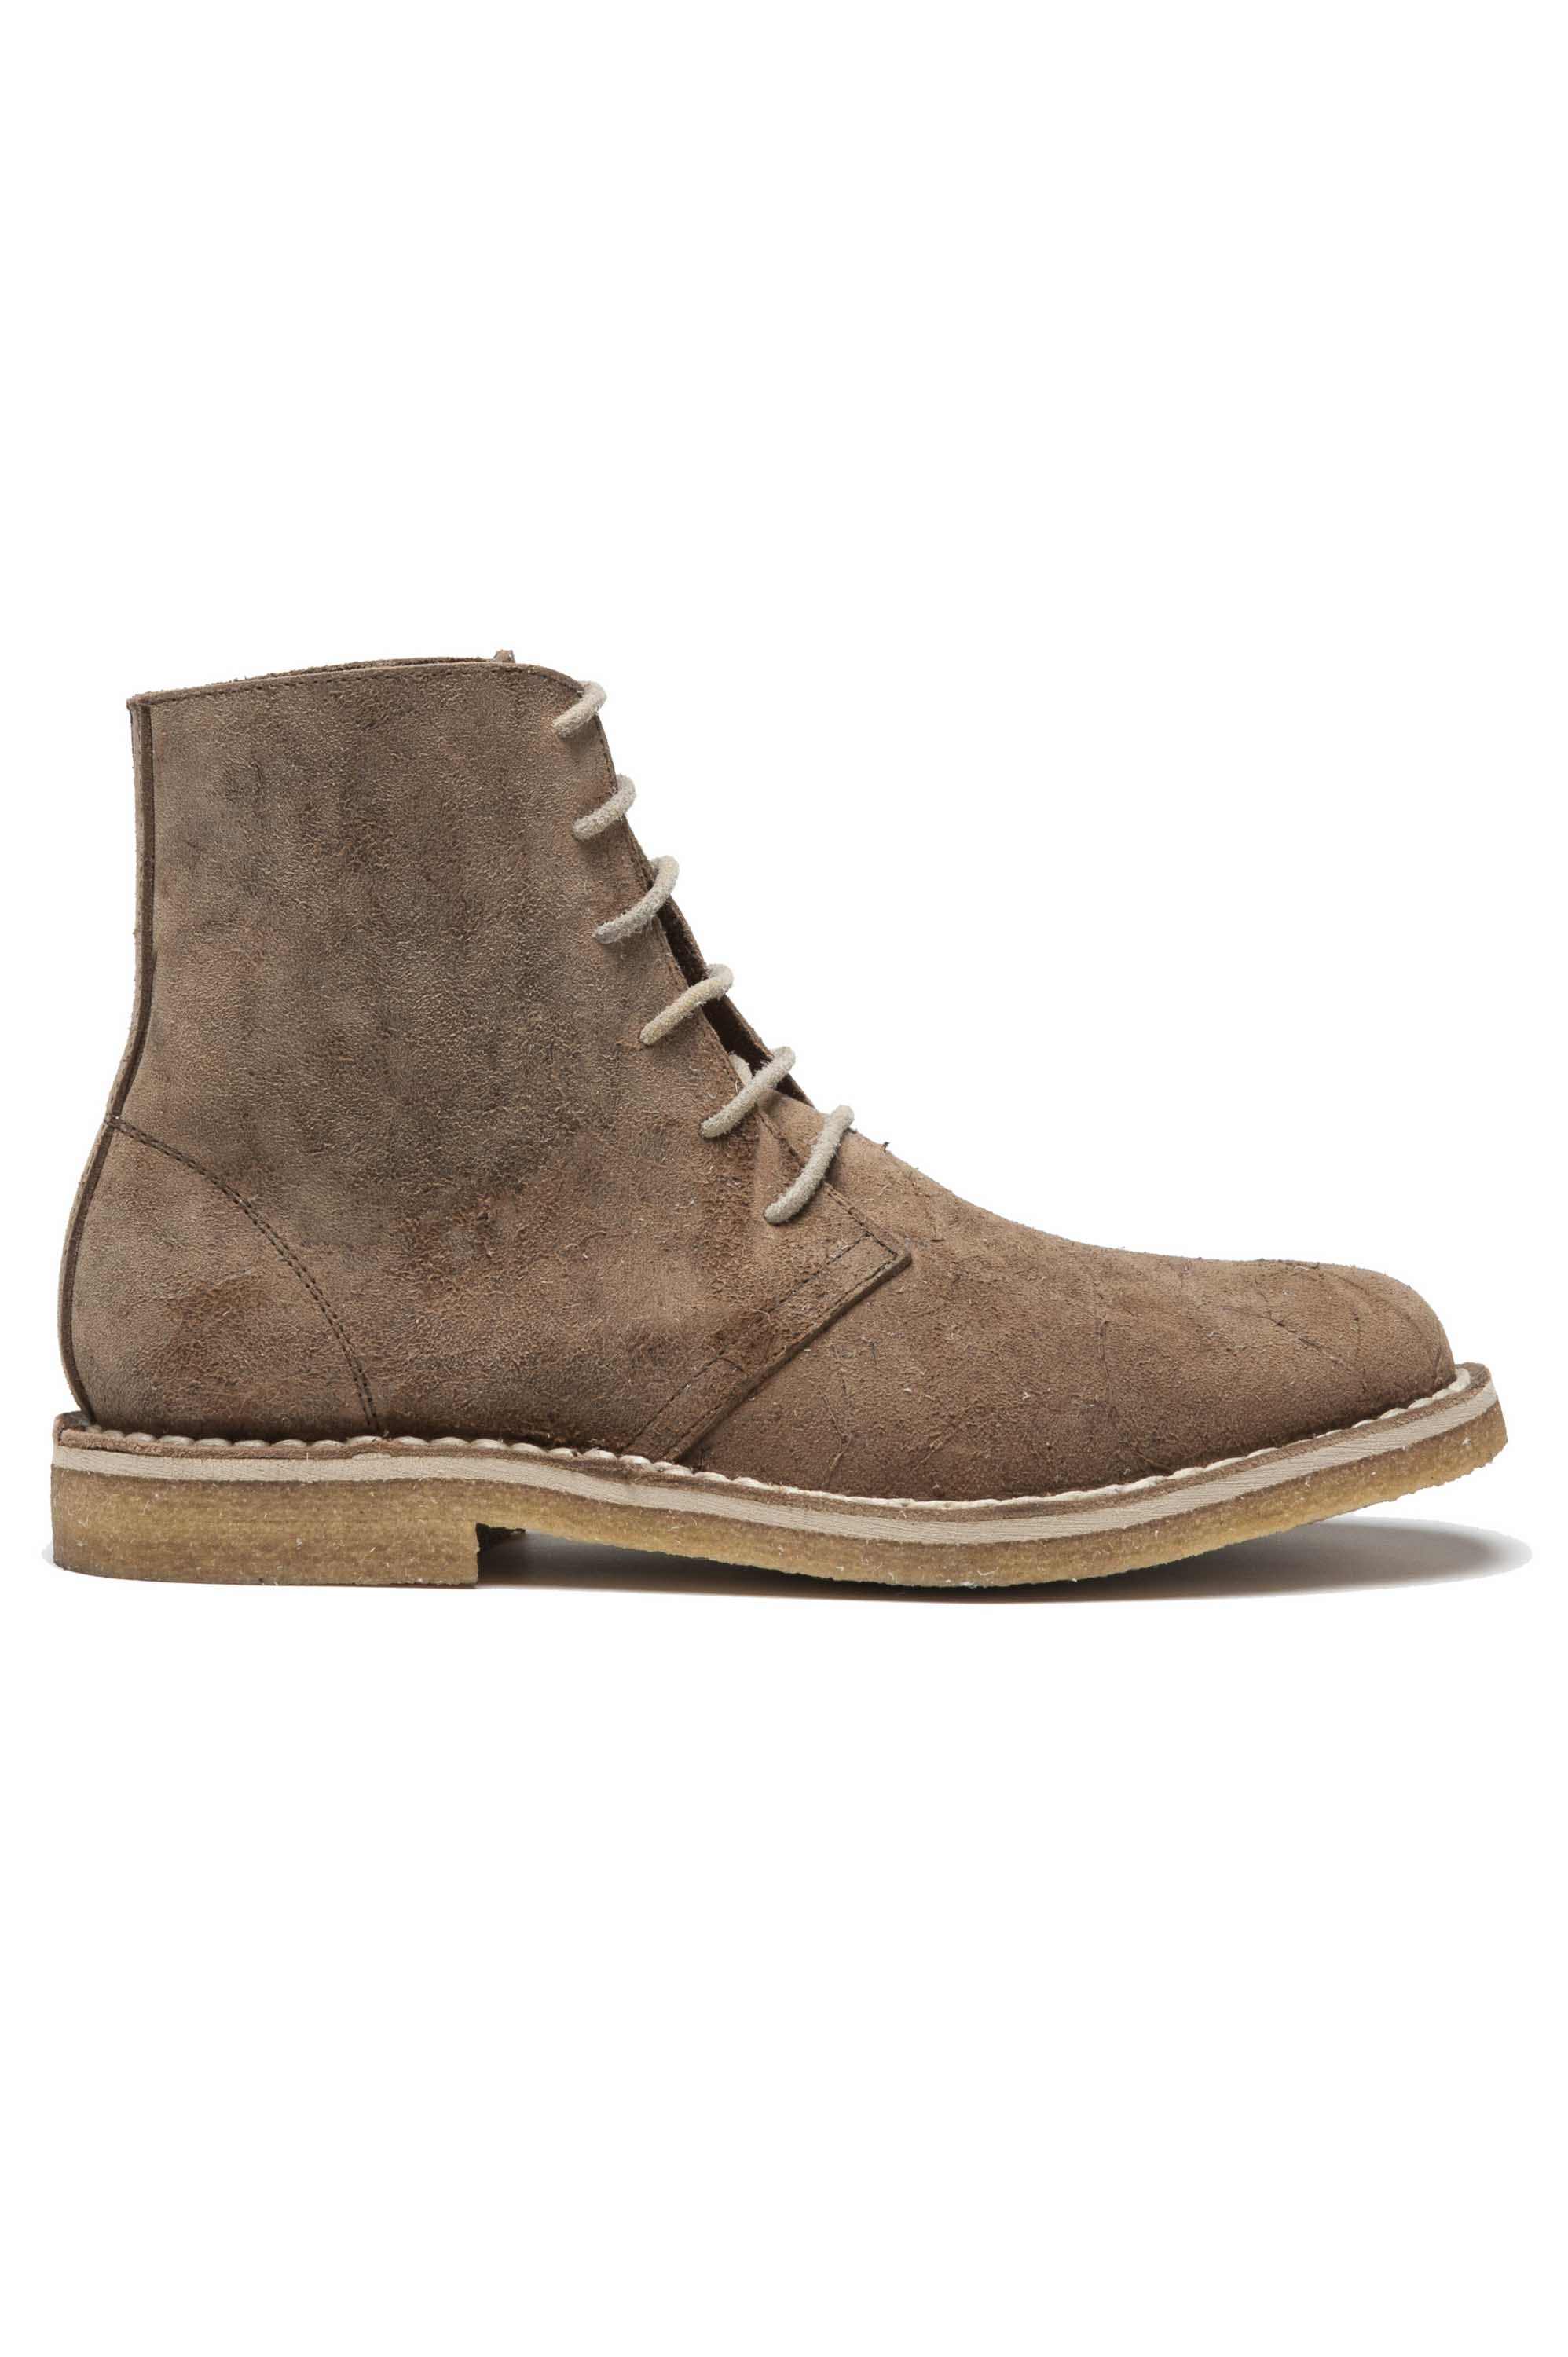 SBU 01510 Classic high top desert boots in beige oiled calfskin leather 01